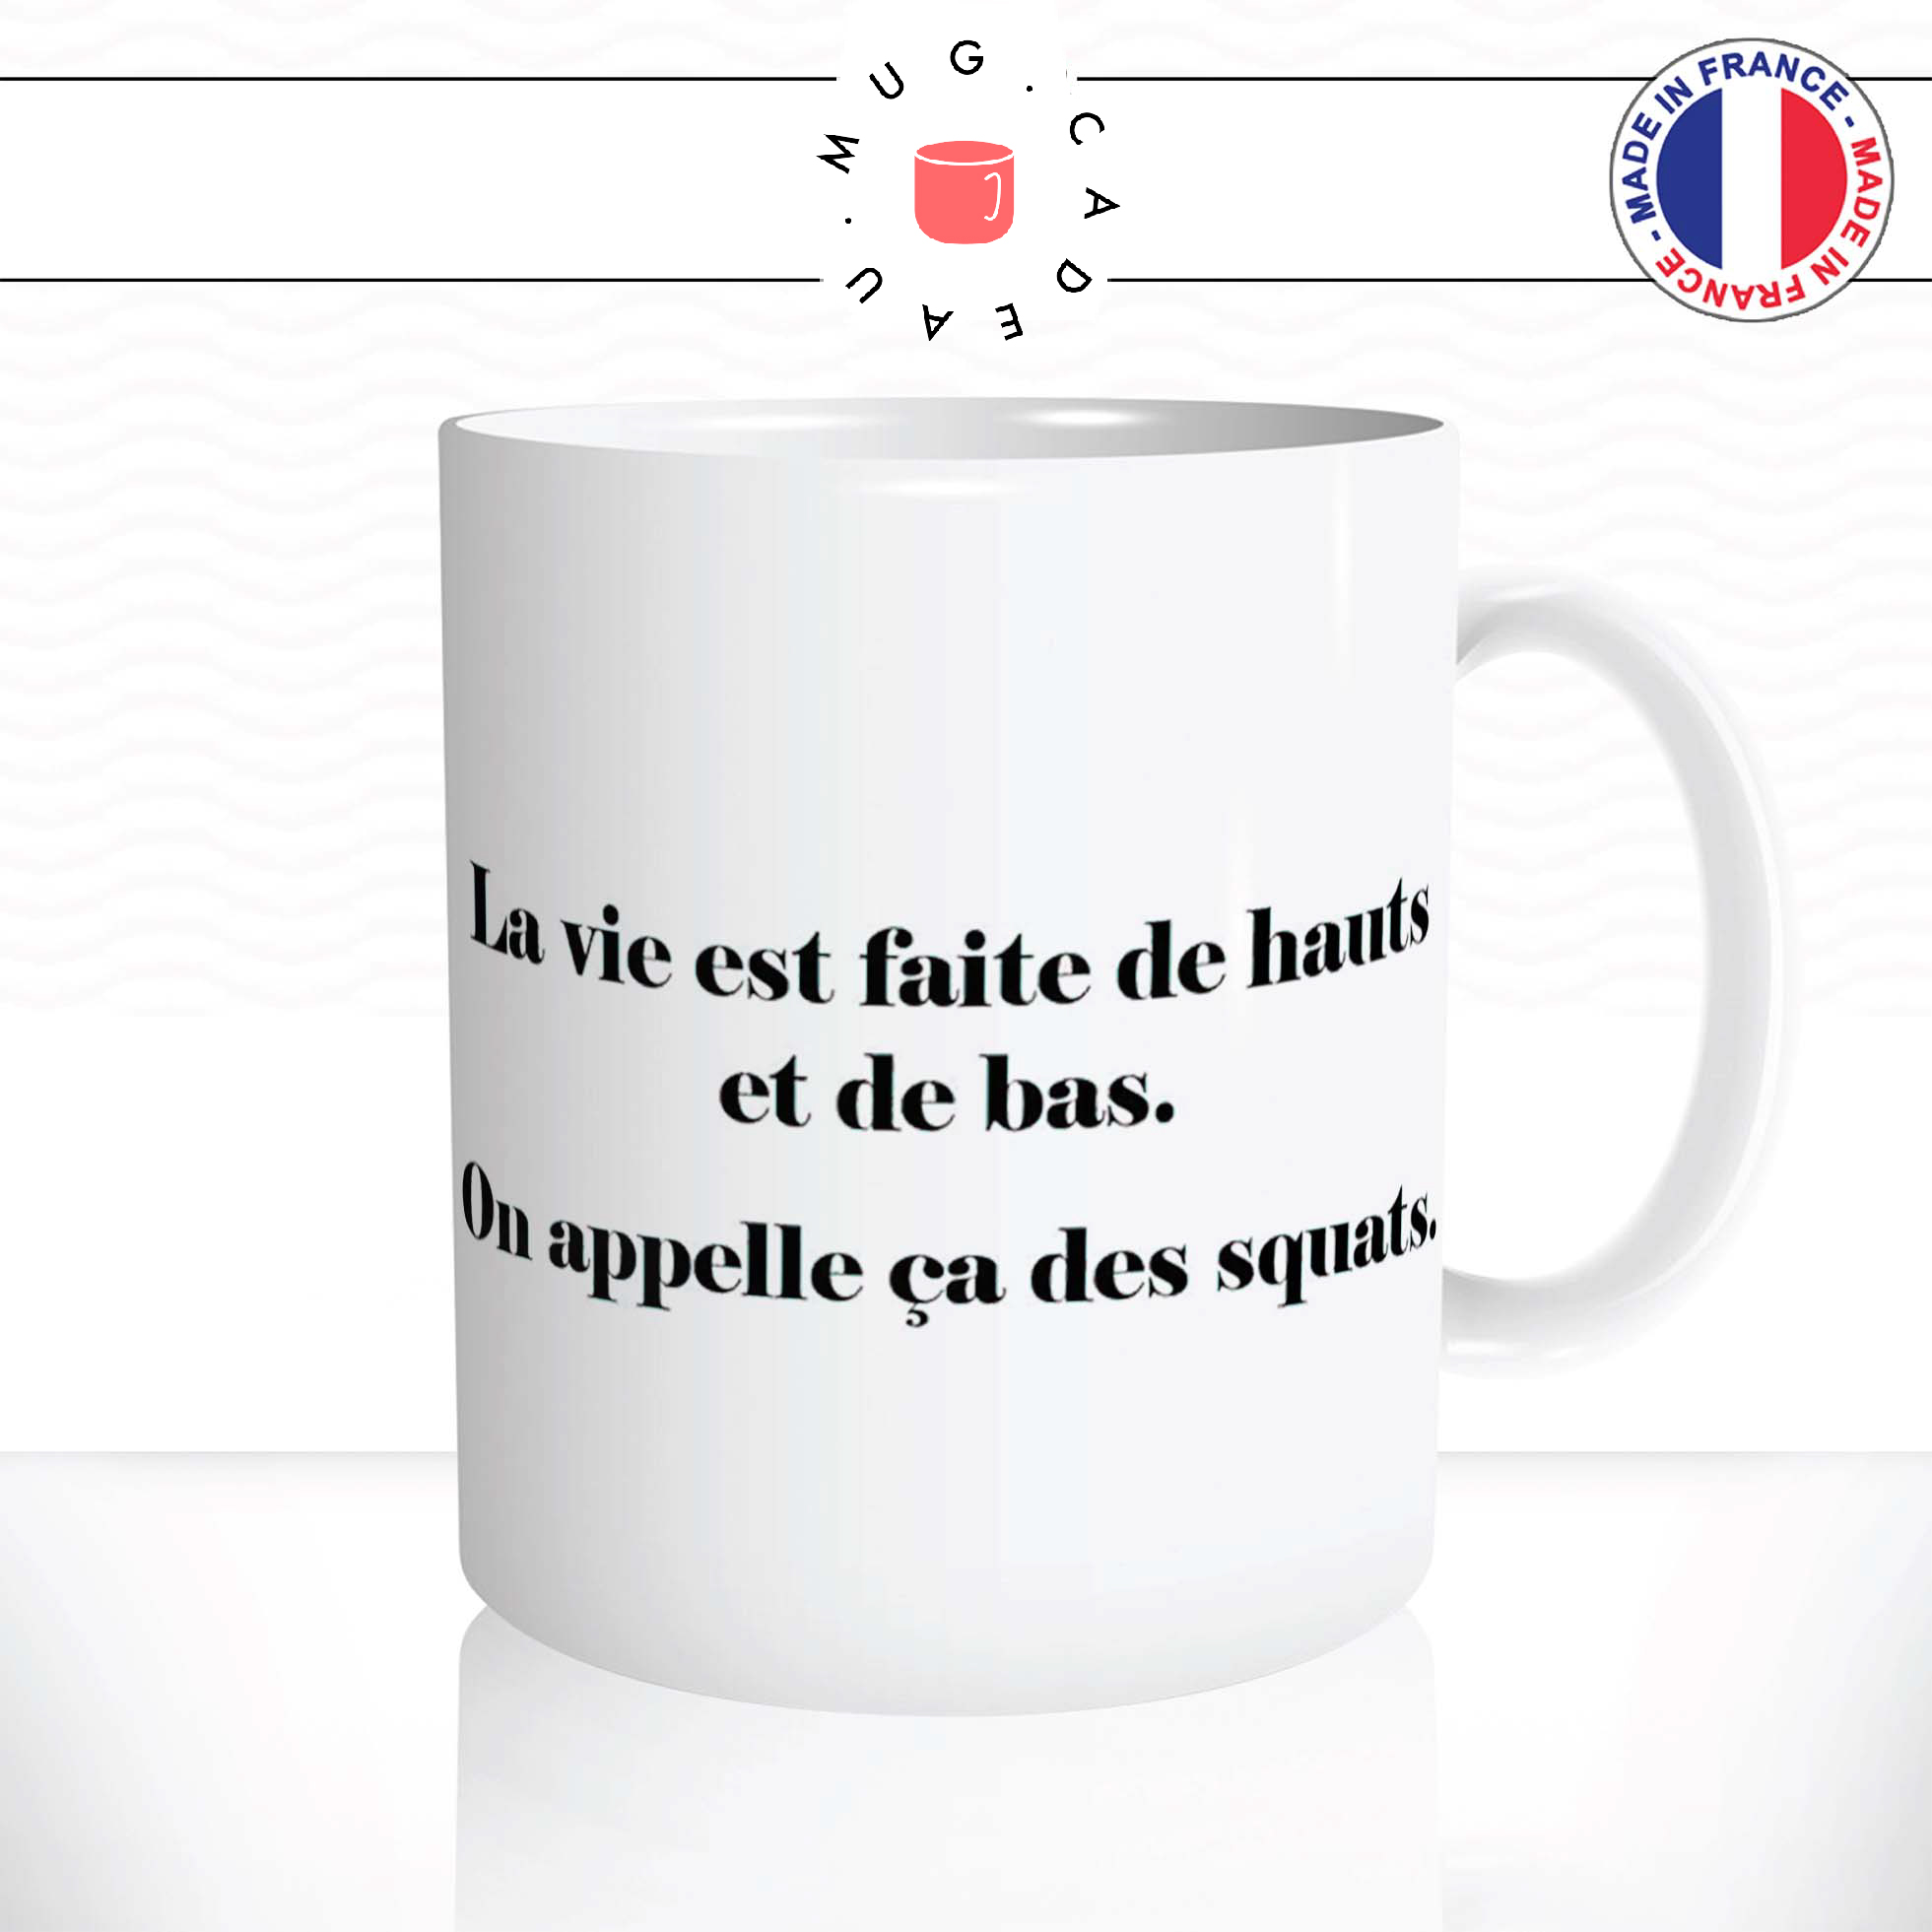 mug-tasse-ref2-citation-motivation-vie-hauts-bas-squats-cafe-the-mugs-tasses-personnalise-anse-droite